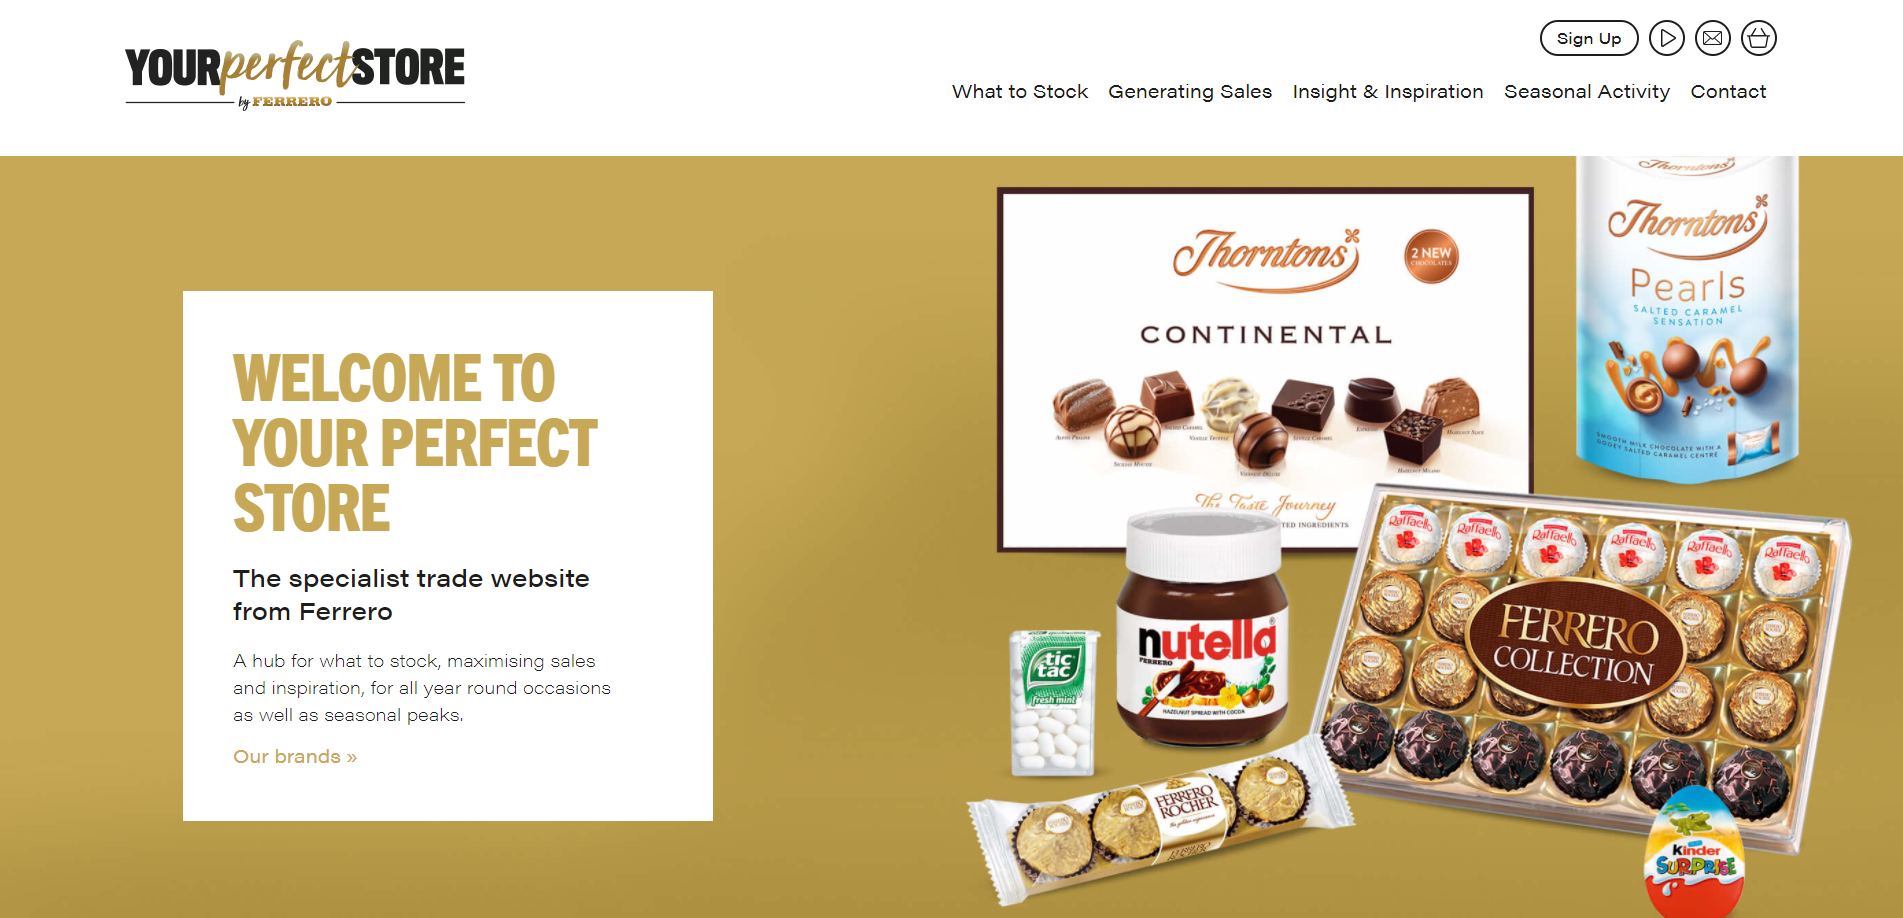 Ferrero relaunches retailer website ‘Your Perfect Store'